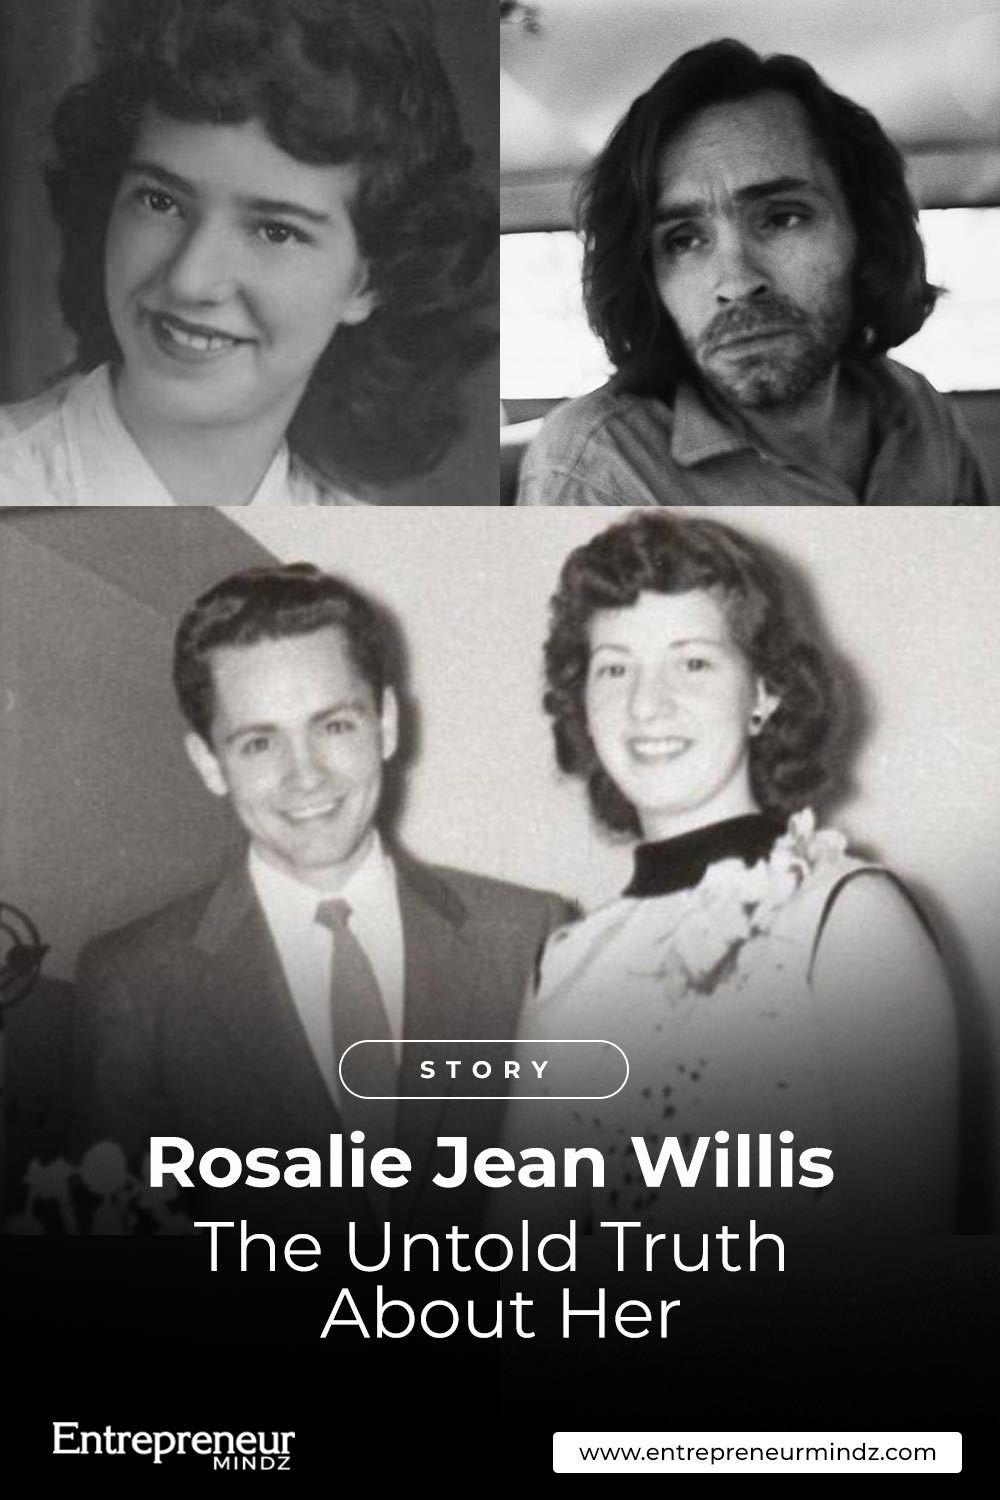 Meet Rosalie Jean Willis